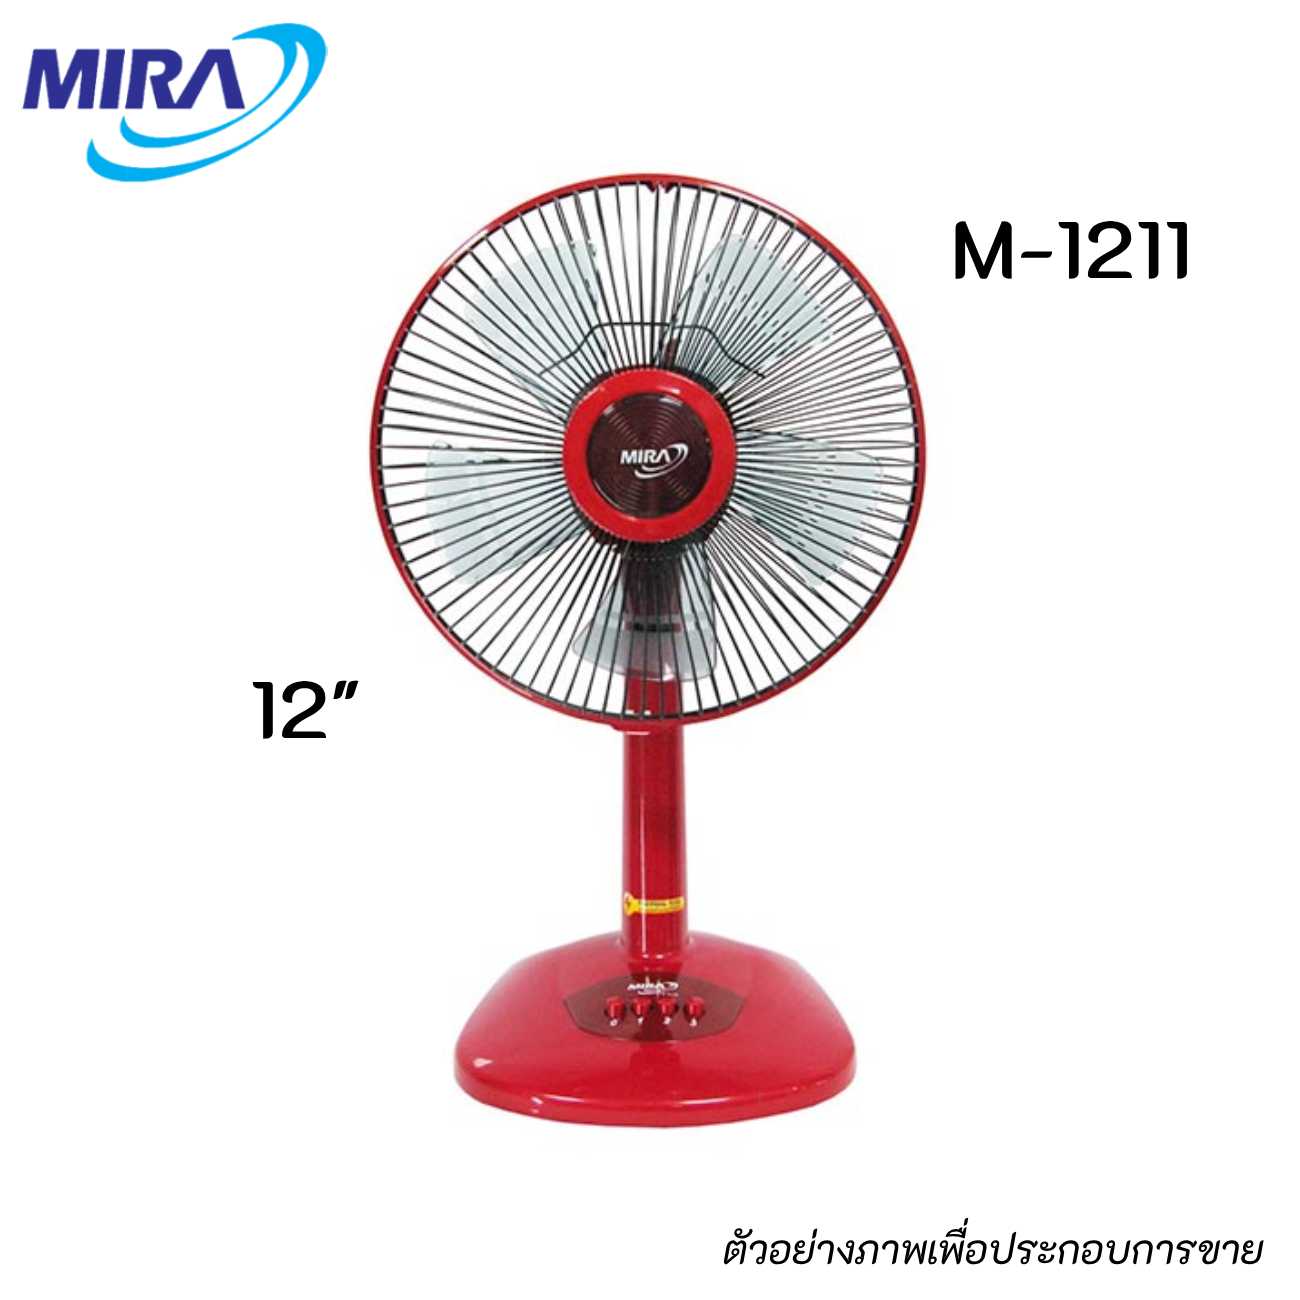 MIRA M-1211 พัดลมตั้งโต๊ะ 12 นิ้ว สีแดง